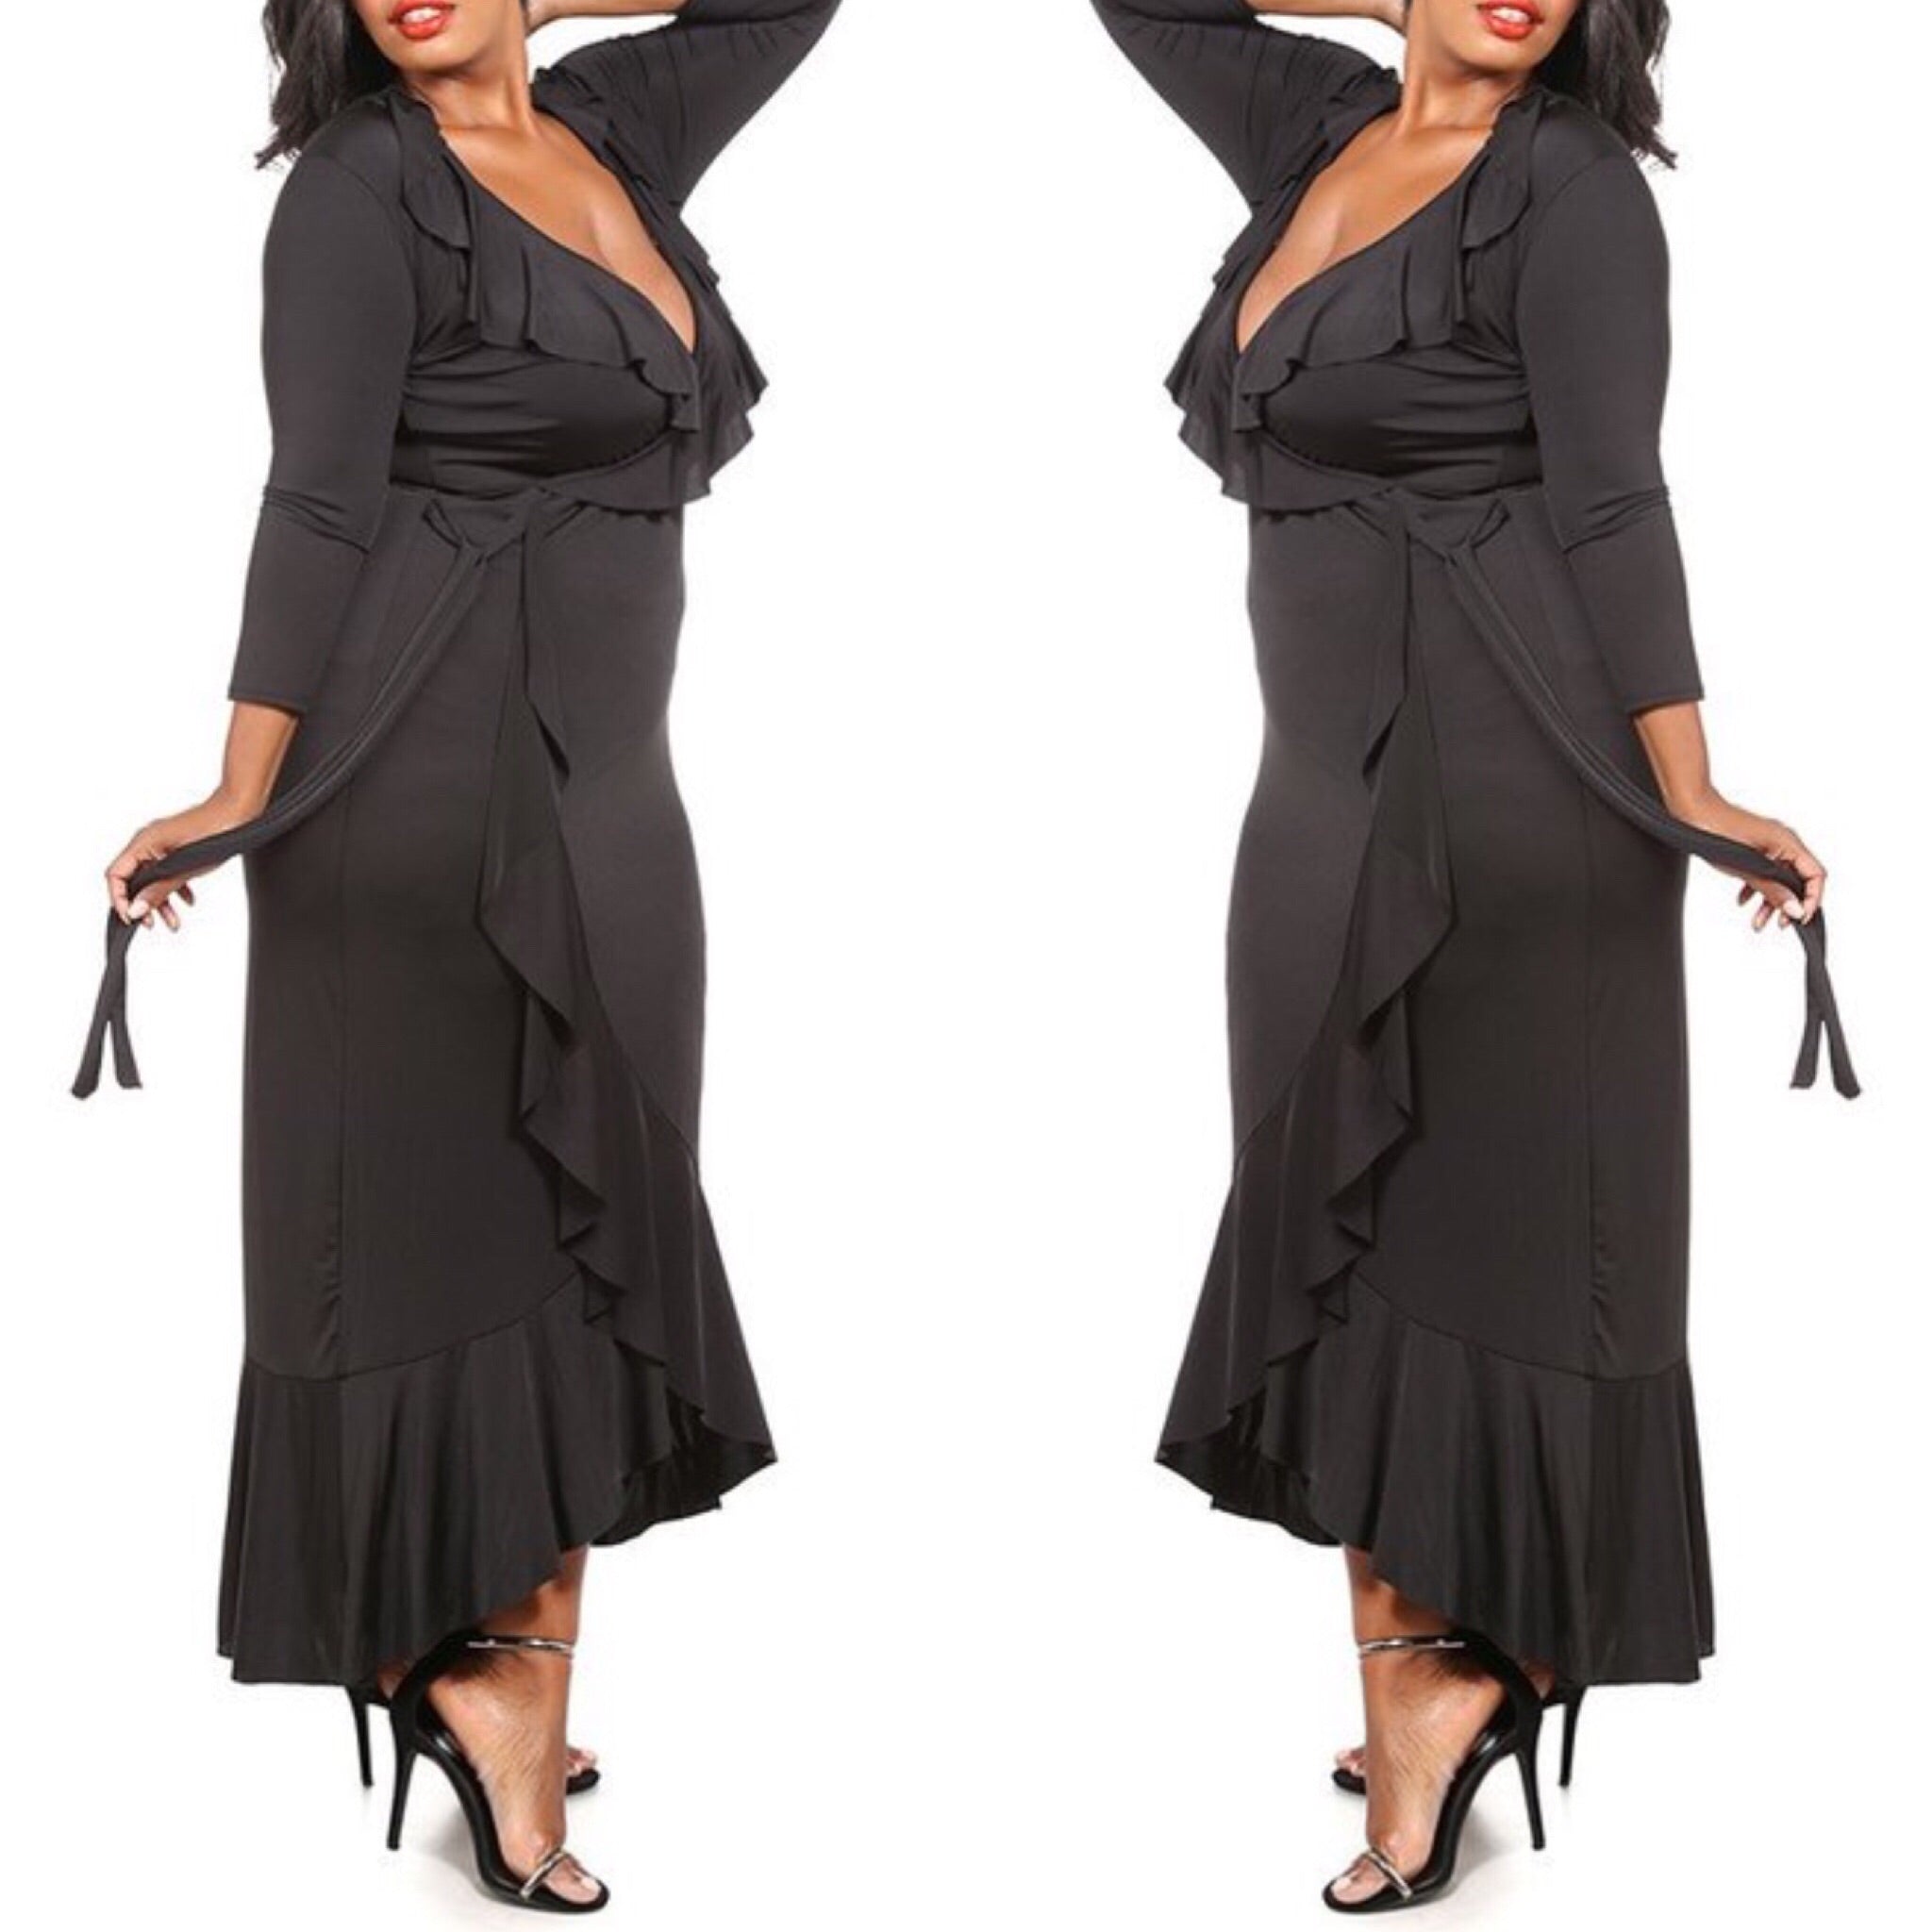 Beverly Ruffle Maxi Dress (Black) - Plus Size